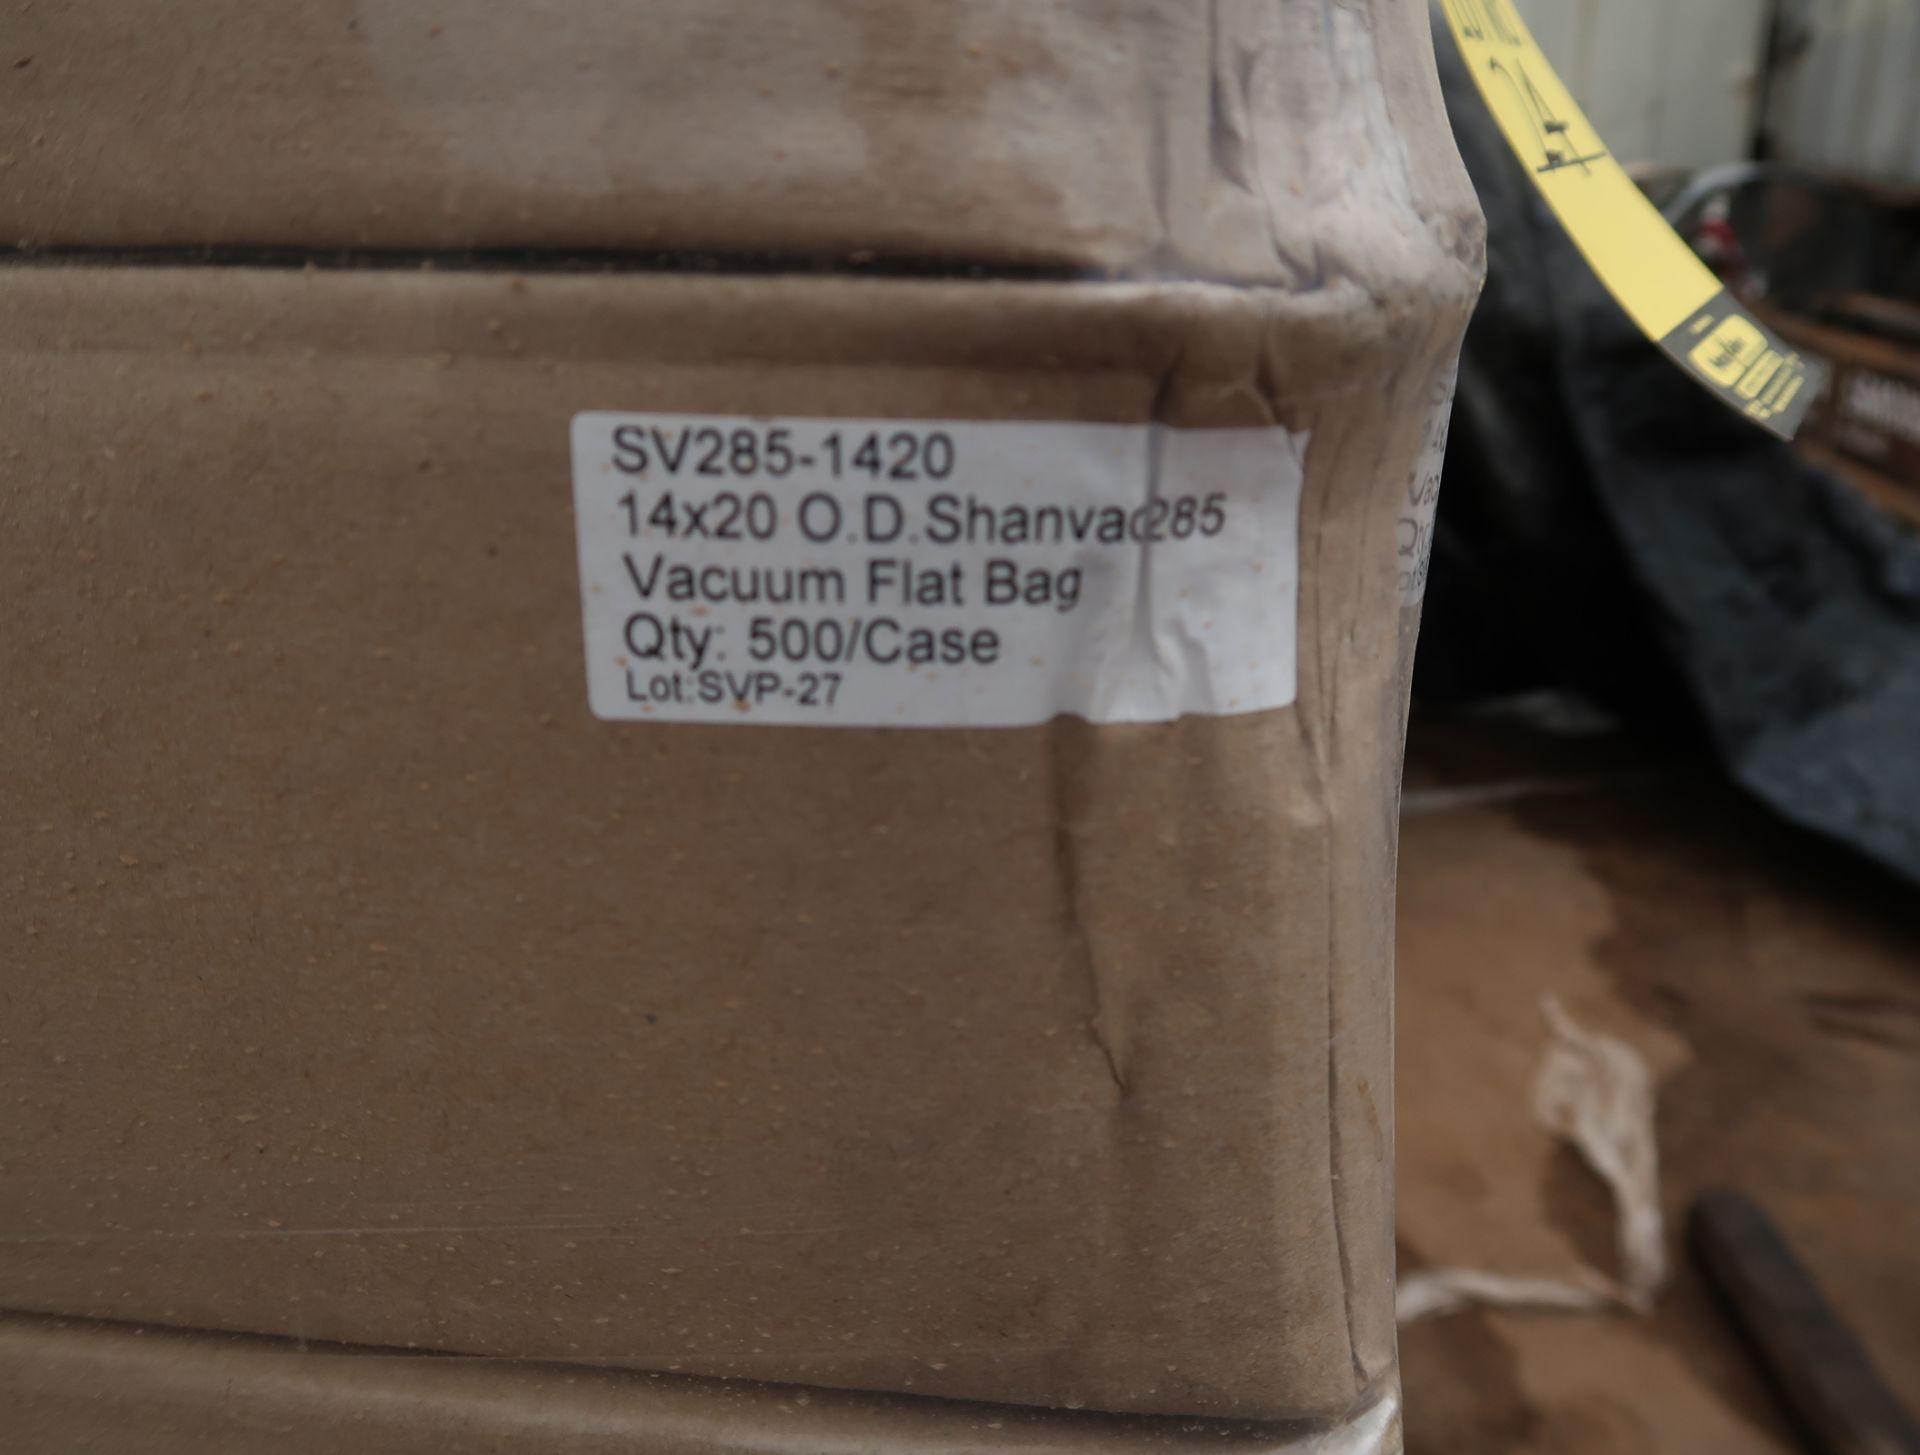 1 PALLET SV285-1420 14X20 O.D SHANVAC 285 VACUUM FLAT BAGS, 500 PER CASE, 28,000 TOTAL - Image 4 of 4